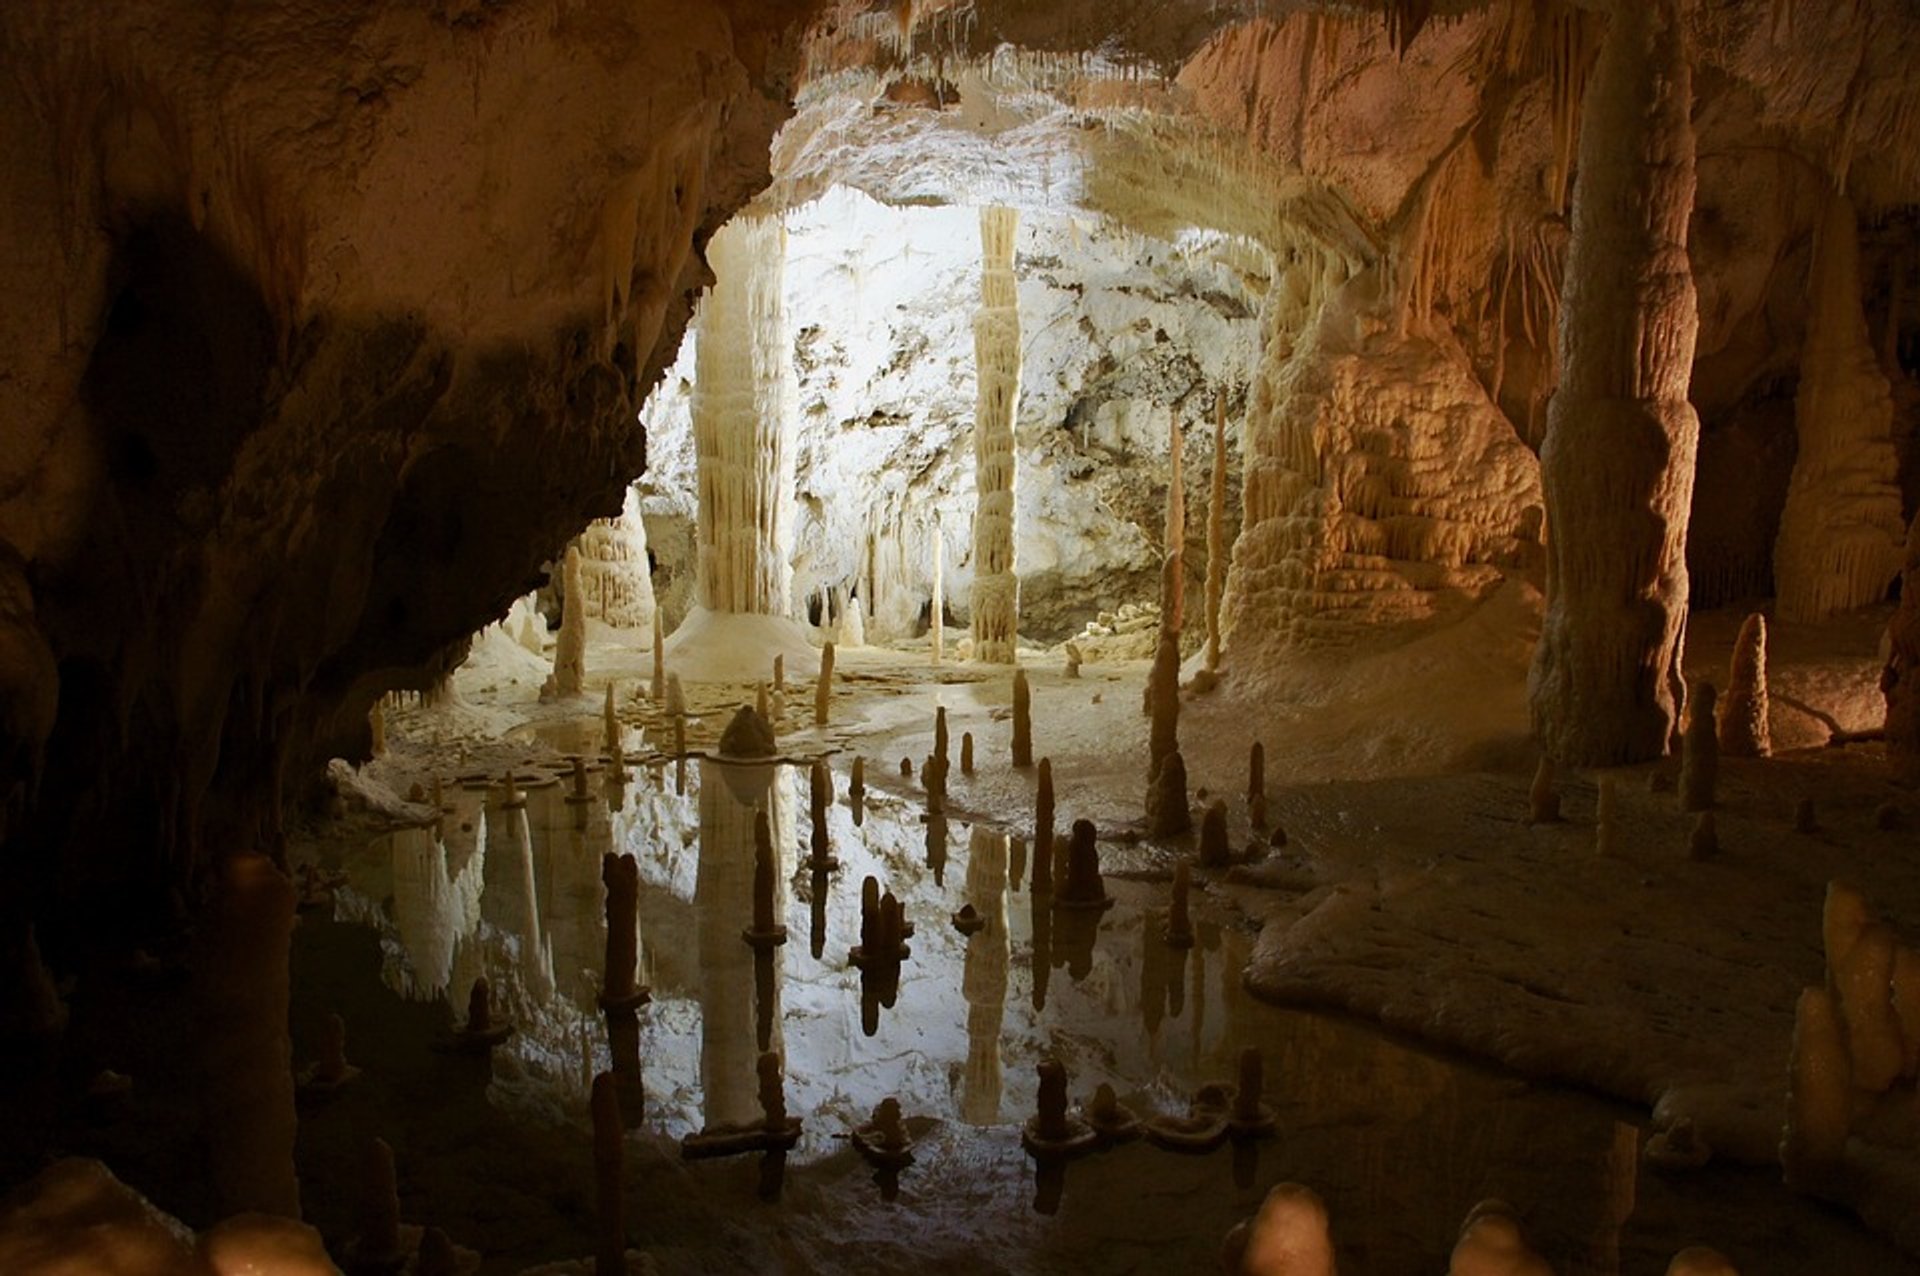 Cuevas de Frasassi (Grotte di Frasassi), Genga